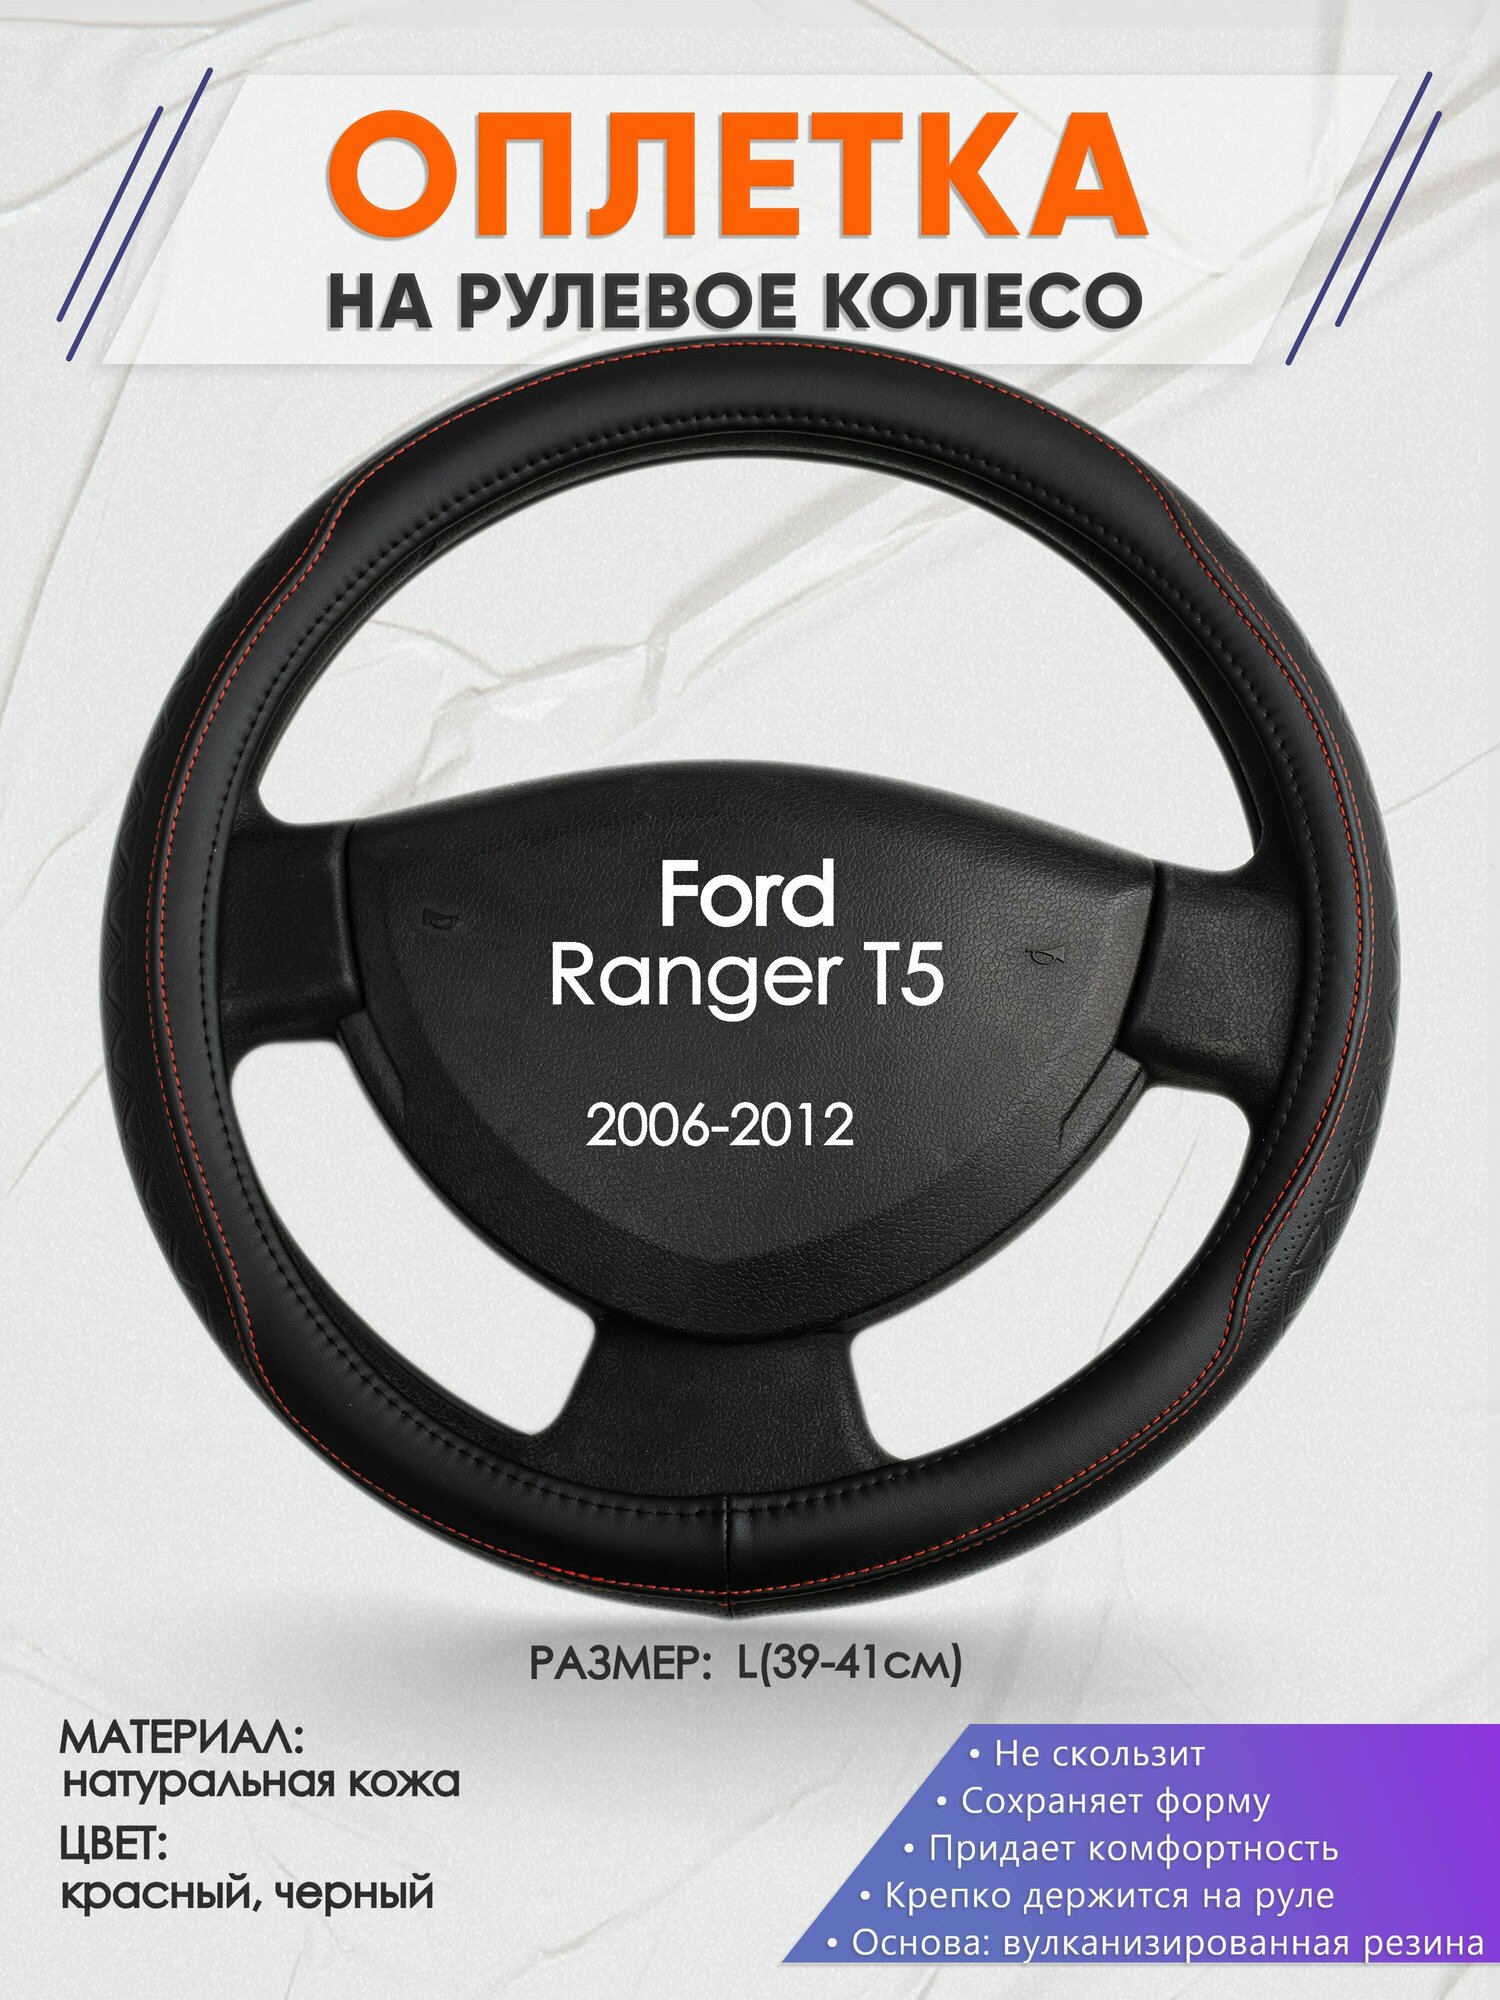 Оплетка на руль для Ford Ranger Т5(Форд Рейнджер Т5) 2006-2012, L(39-41см), Натуральная кожа 90